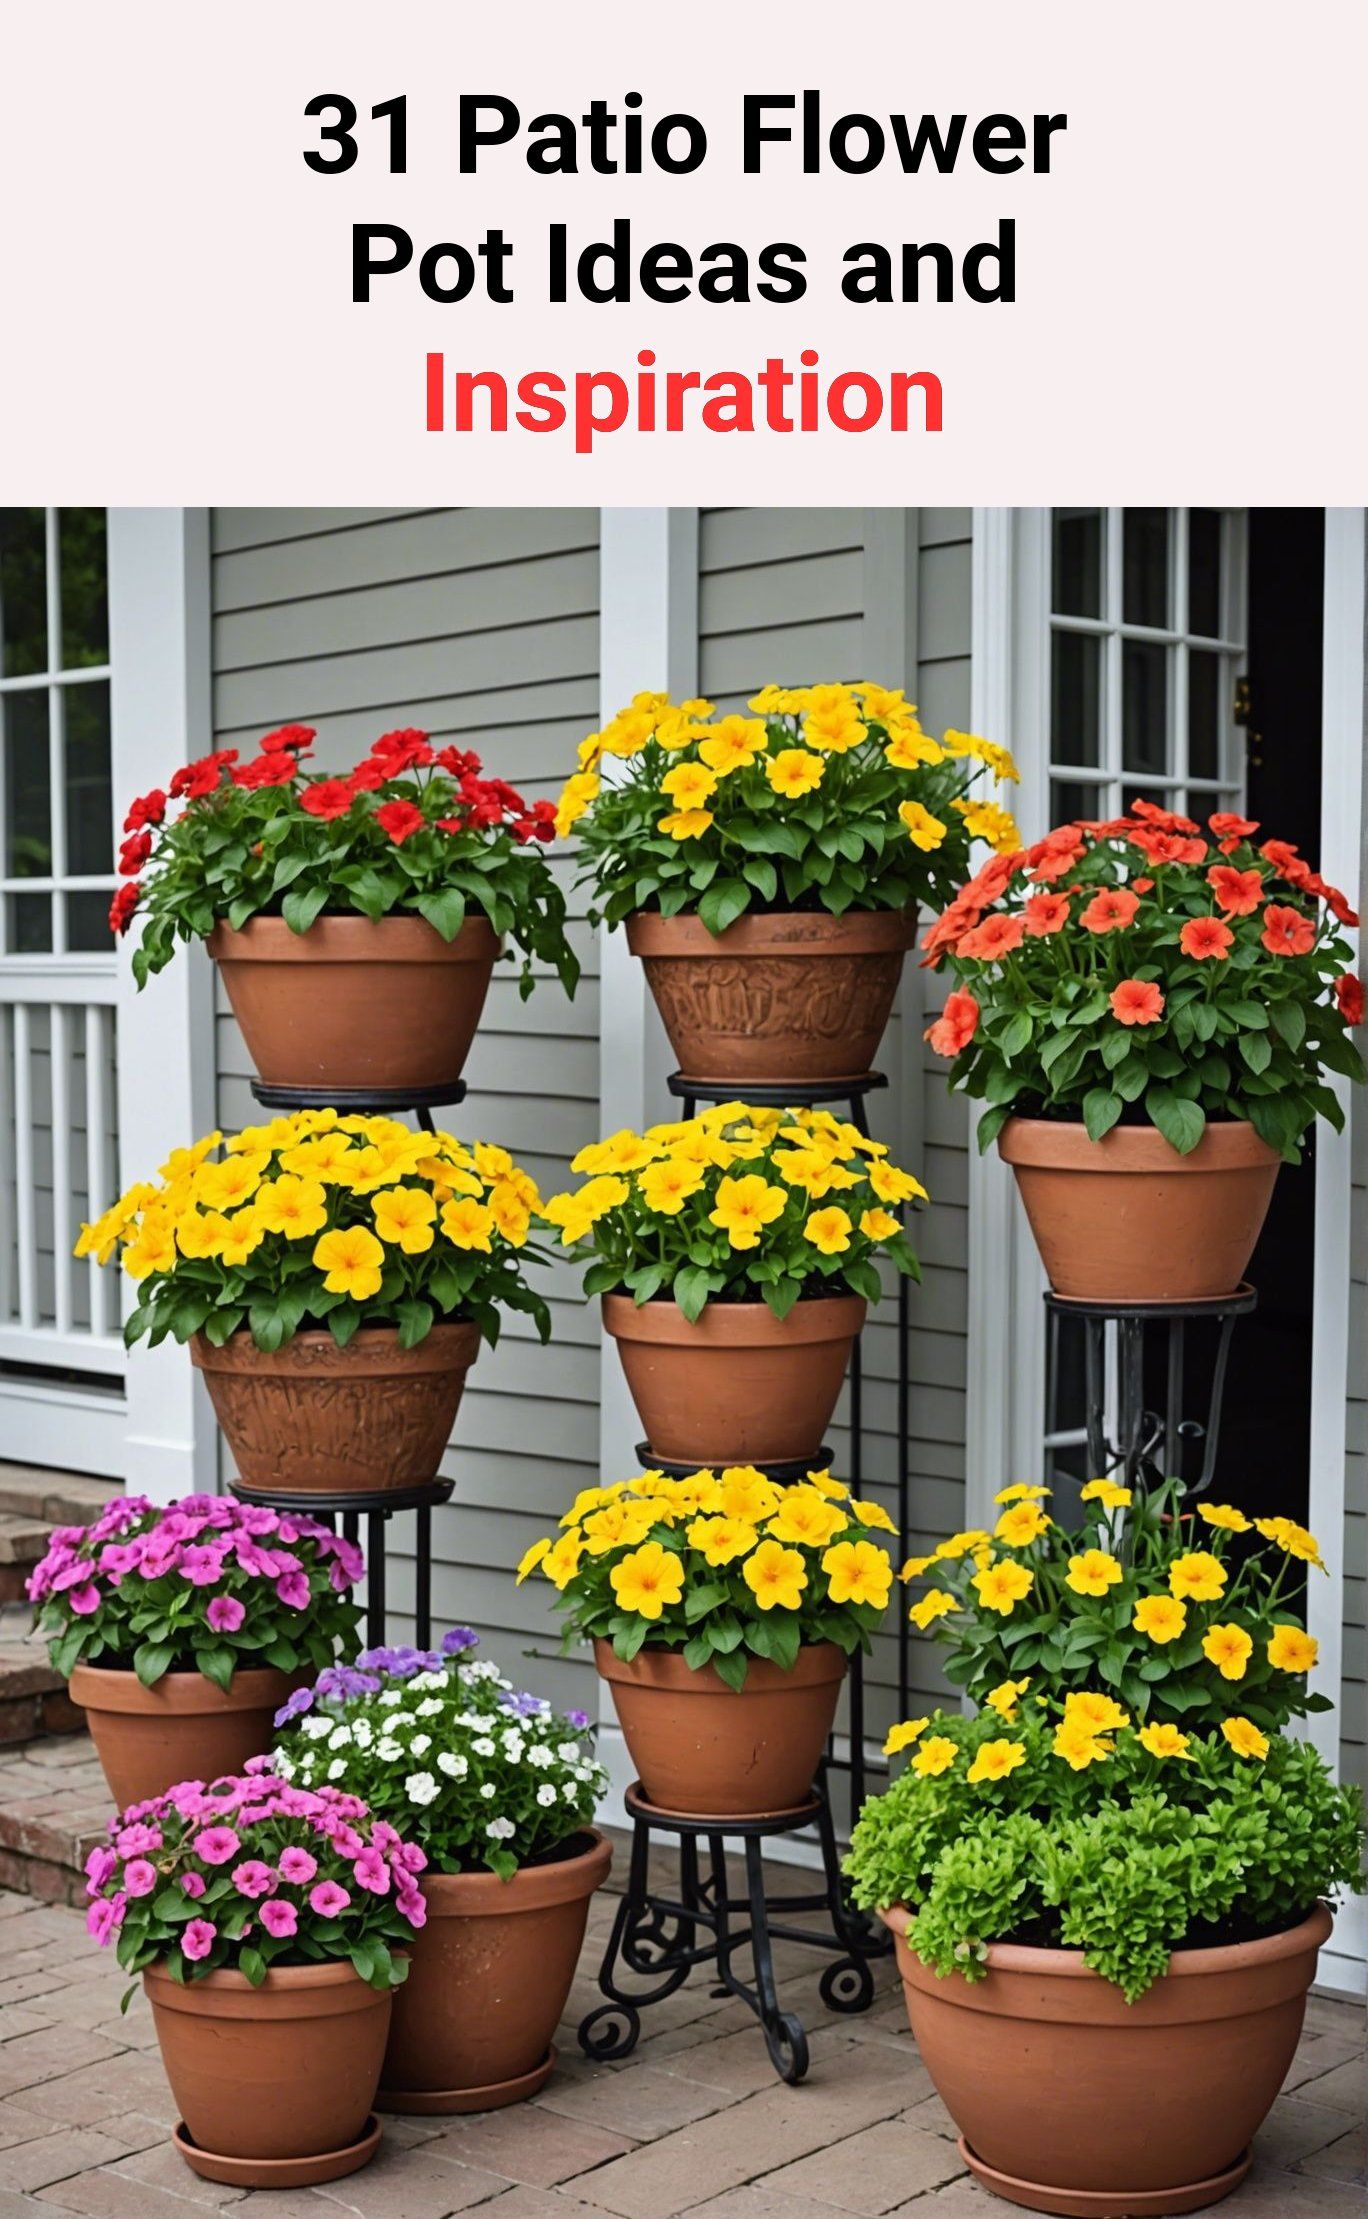 31 Patio Flower Pot Ideas and Inspiration